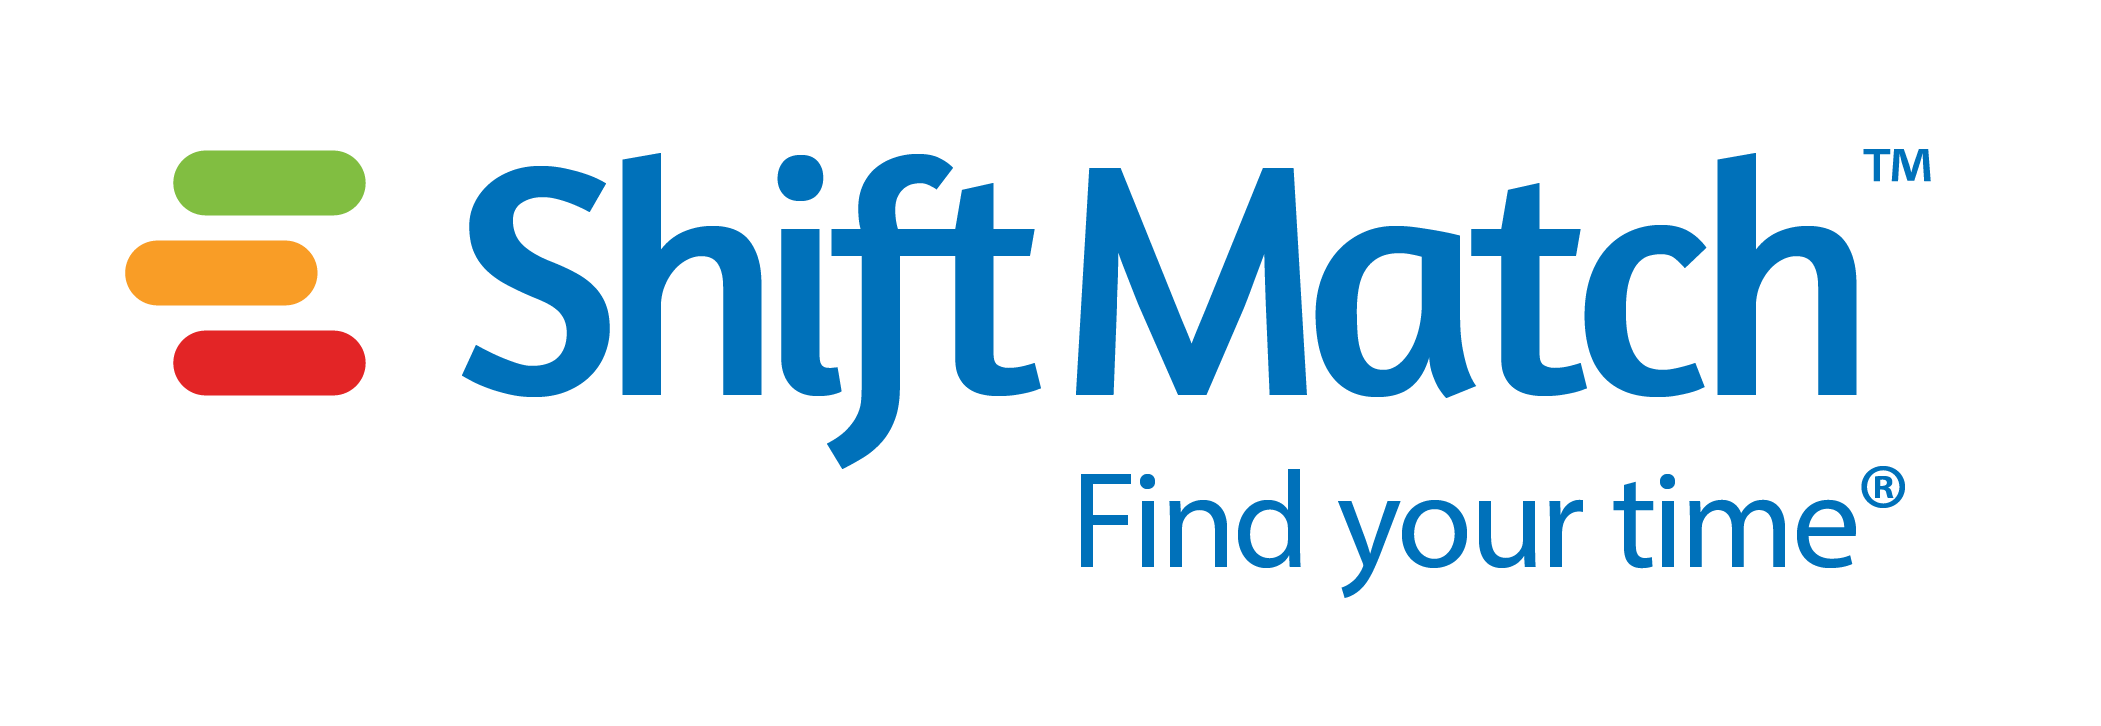 Shiftmatch_logo_tag